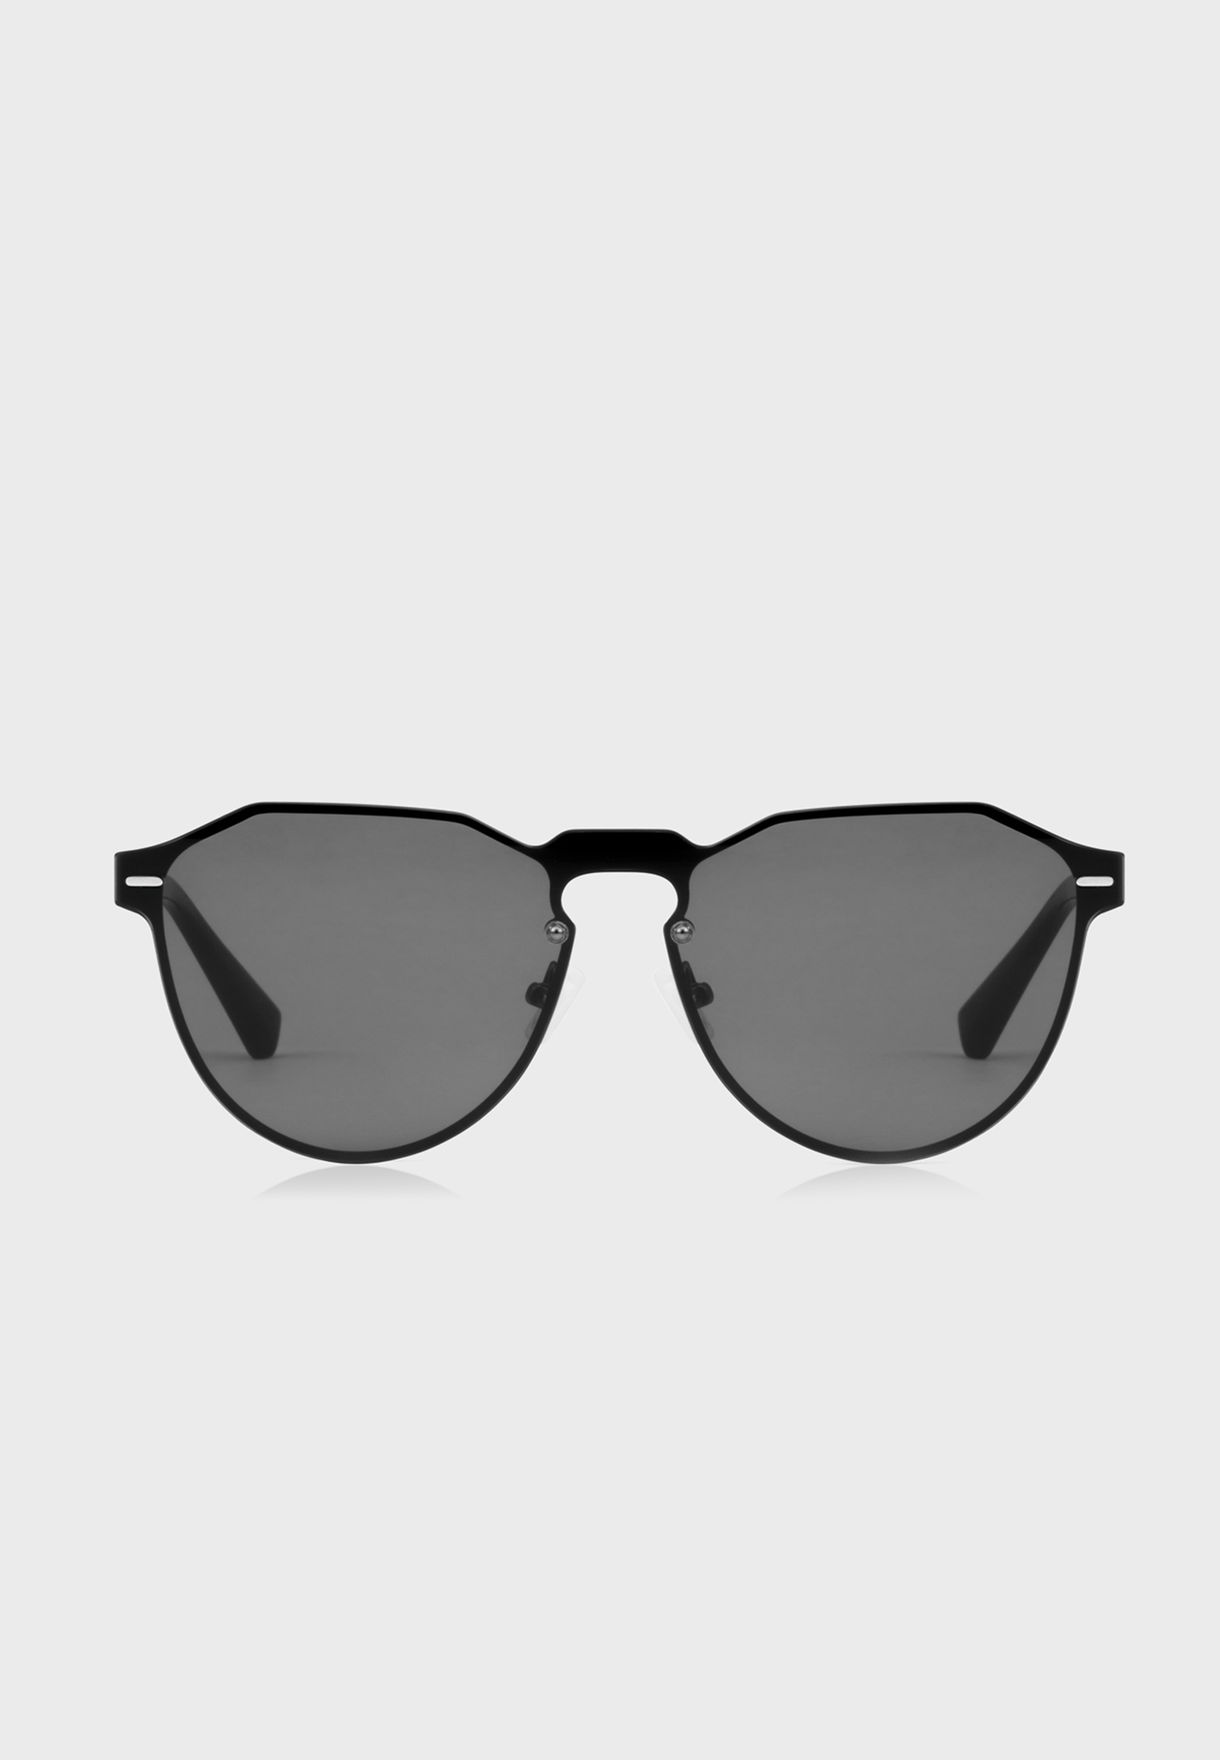 Warwick Venm Metal Wayferer Sunglasses